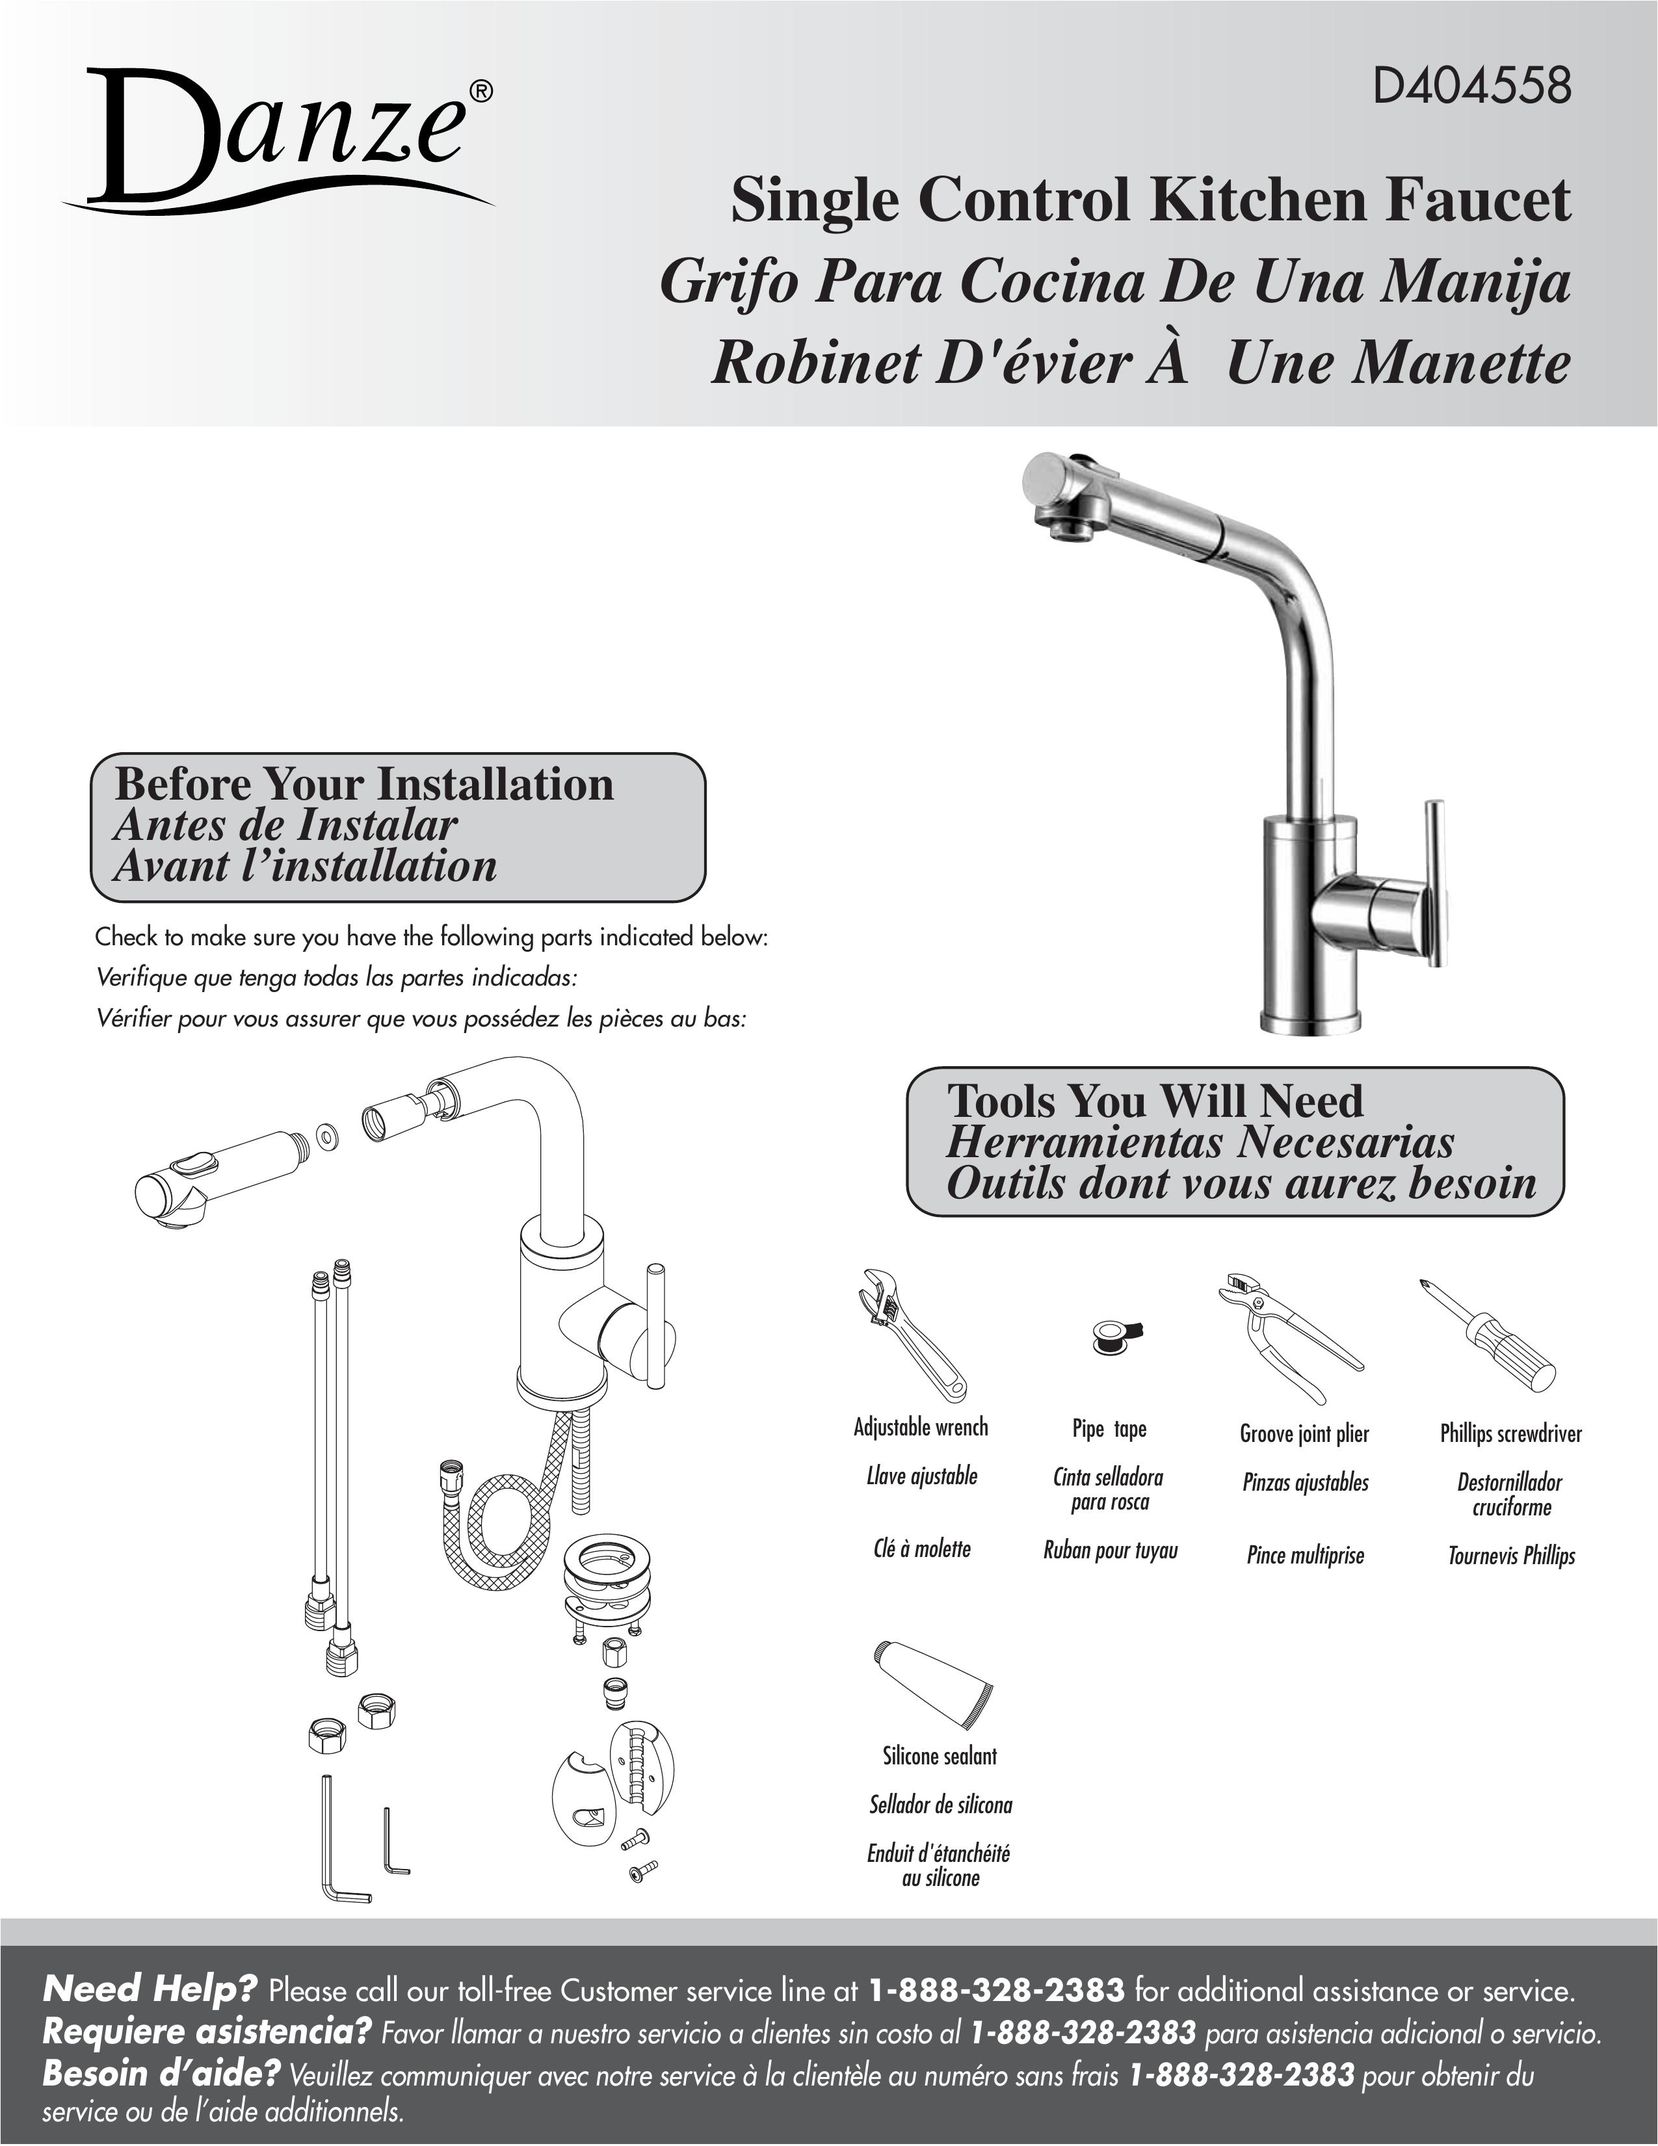 Husqvarna D404558 Plumbing Product User Manual